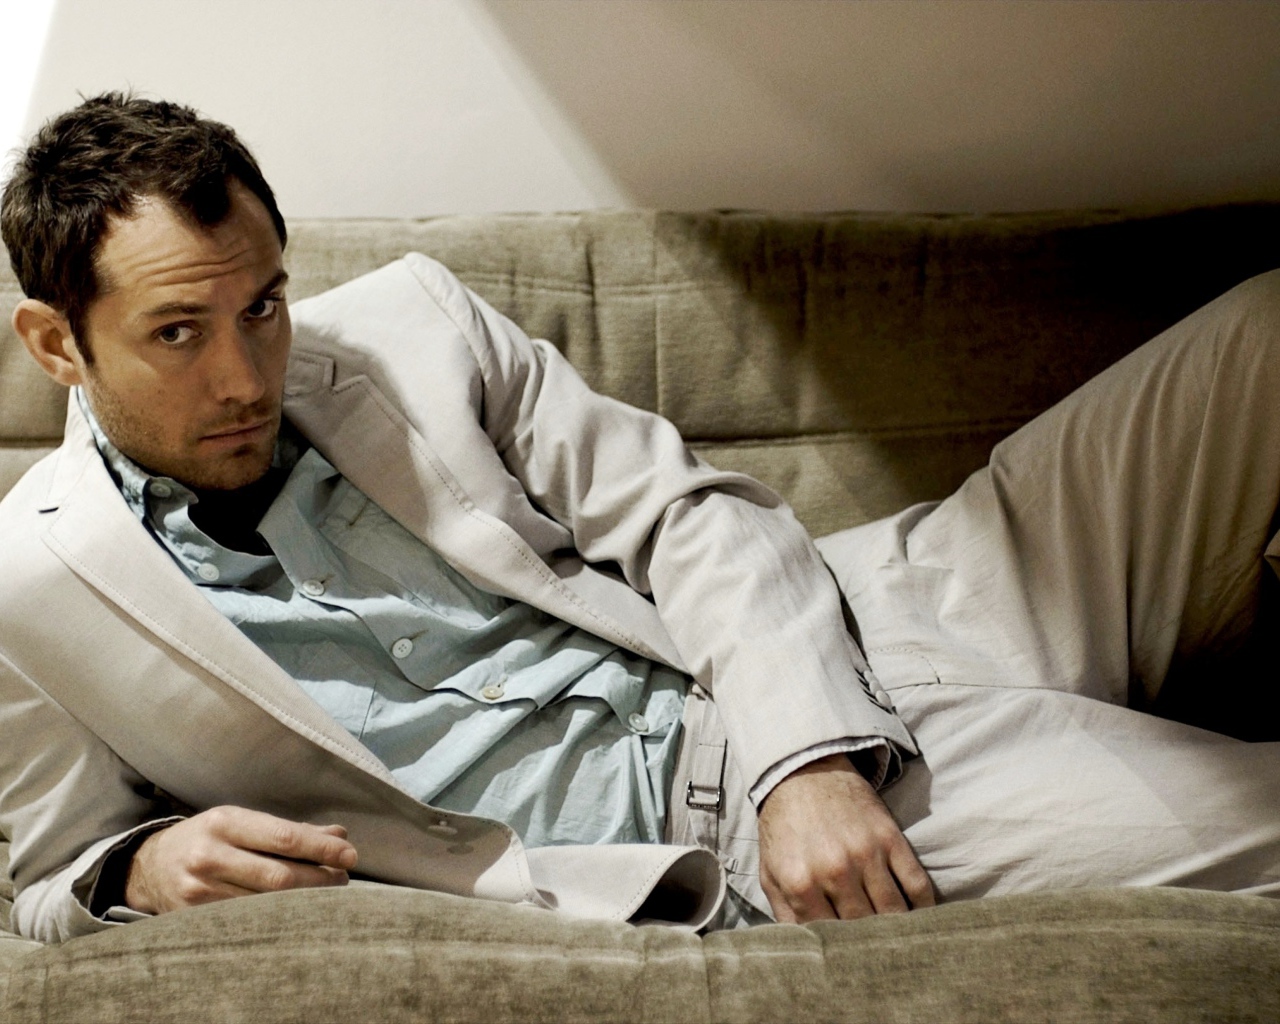 Британский актер Джуд Лоу в костюме лежит на диване